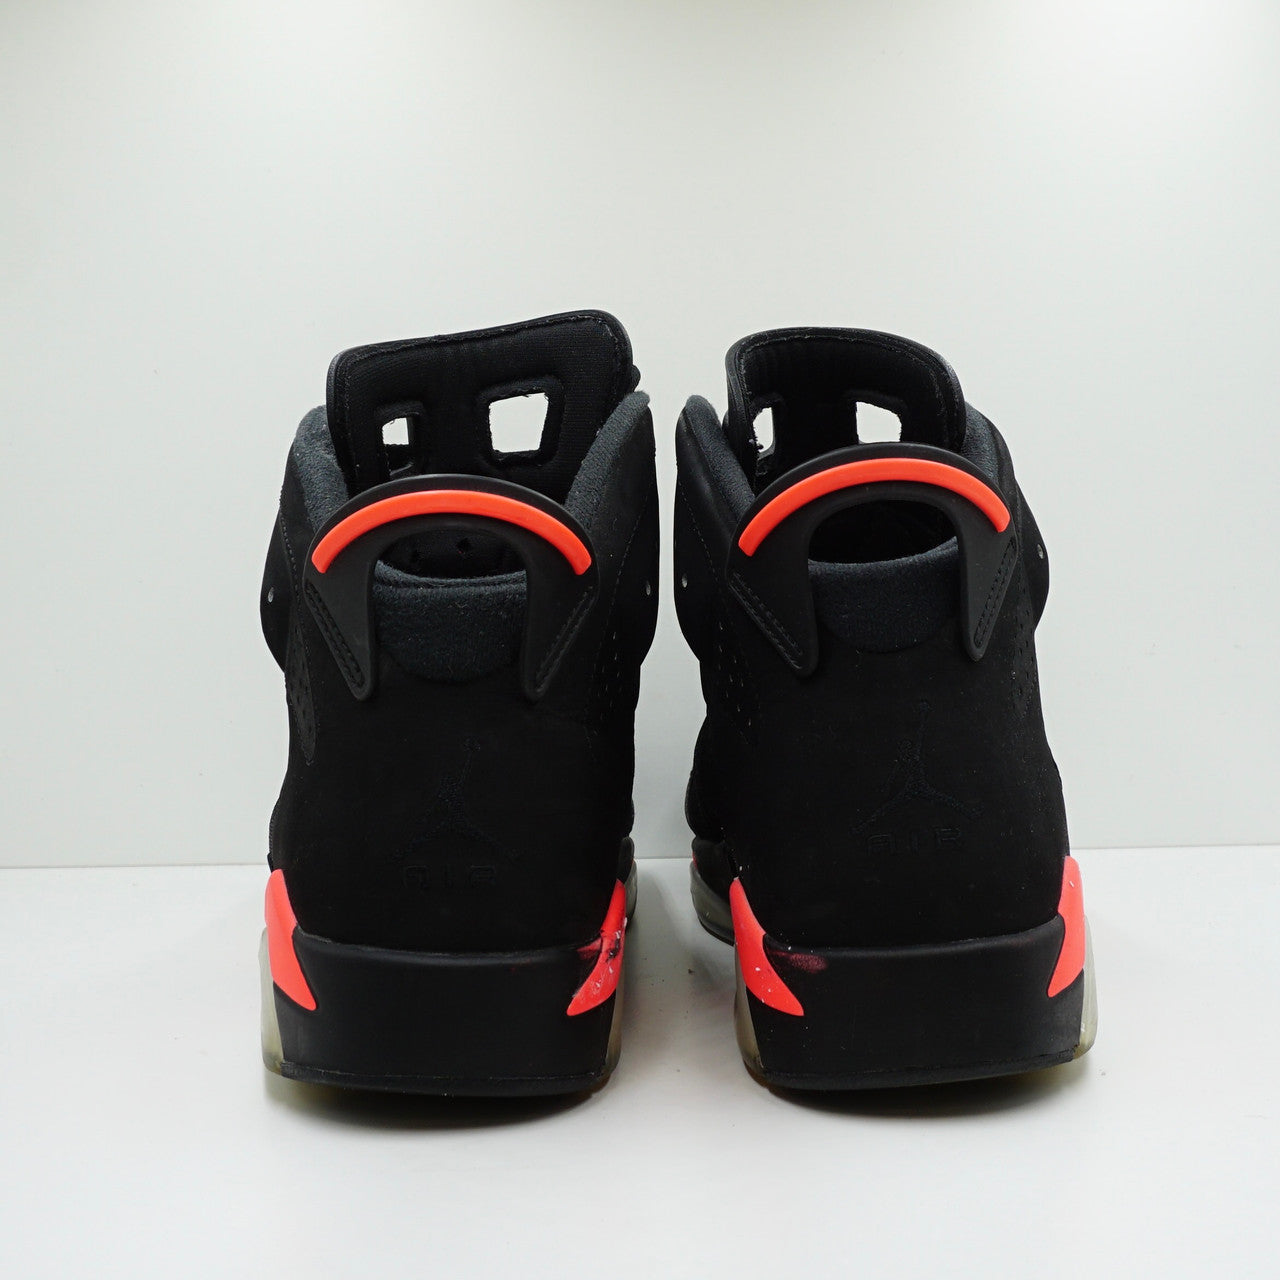 Jordan 6 Retro Infrared Black (2014)